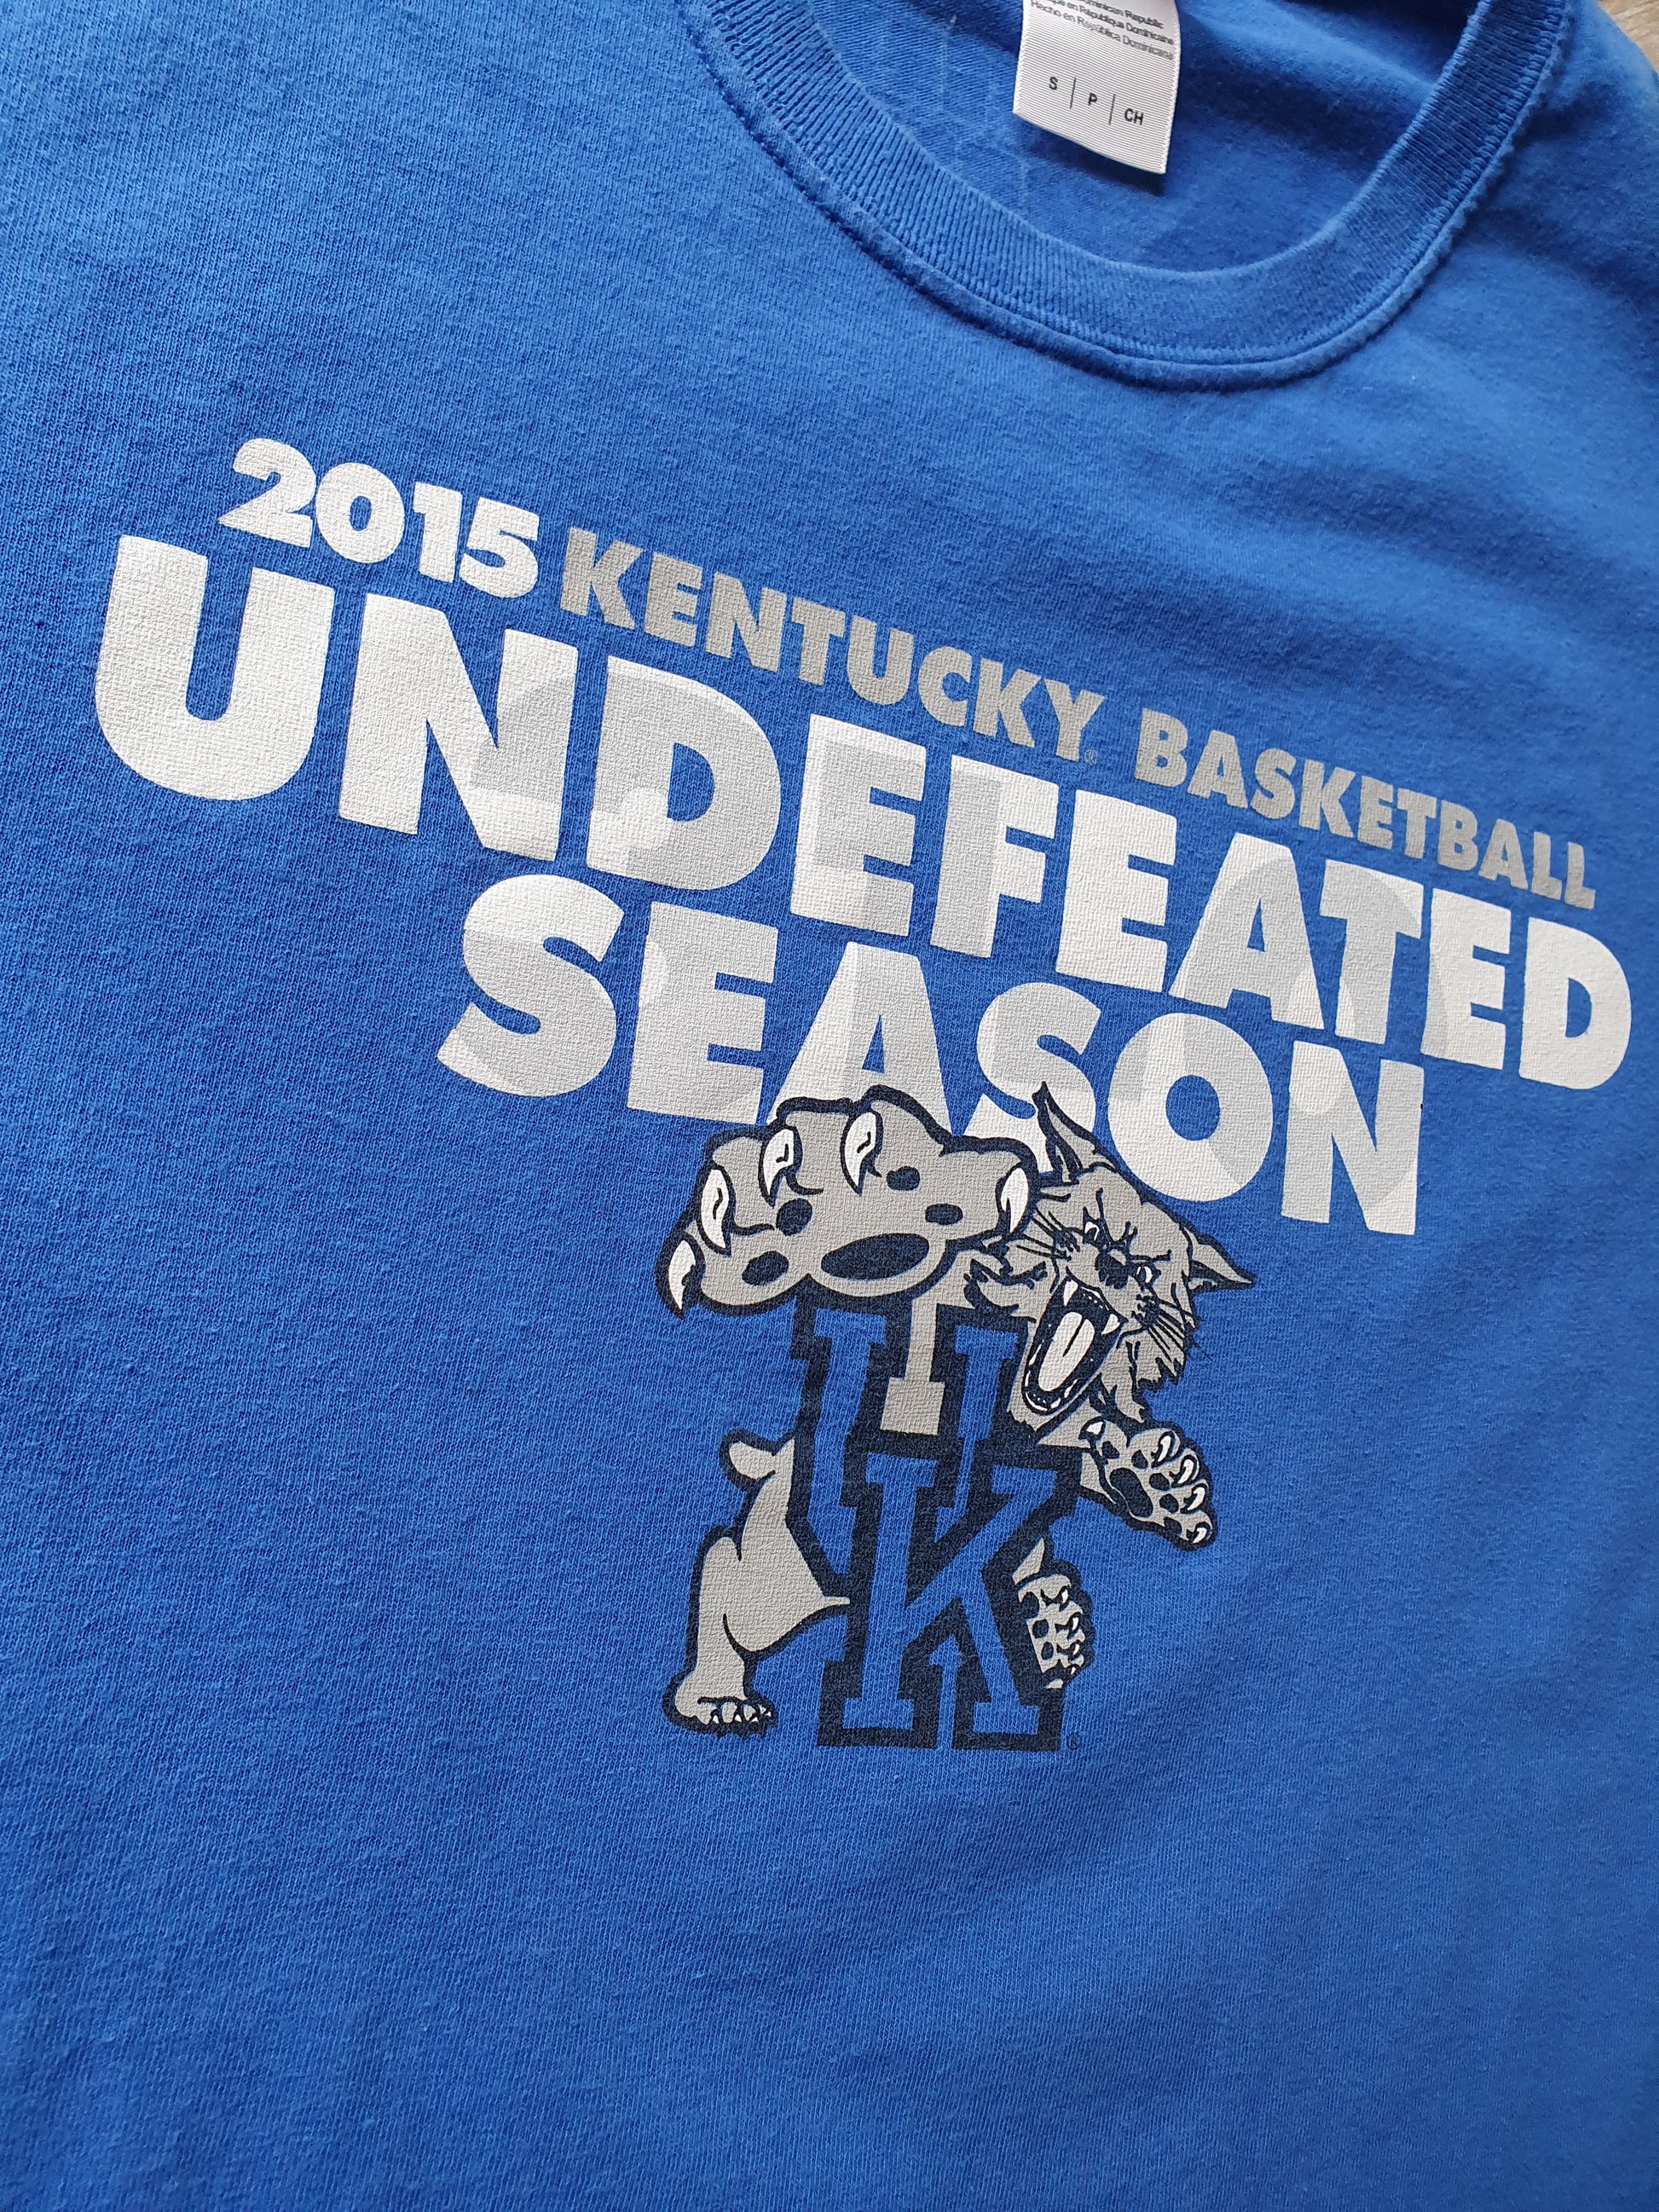 Kentucky Wildcats 2015 Undefeated Season T-Shirt Size Small